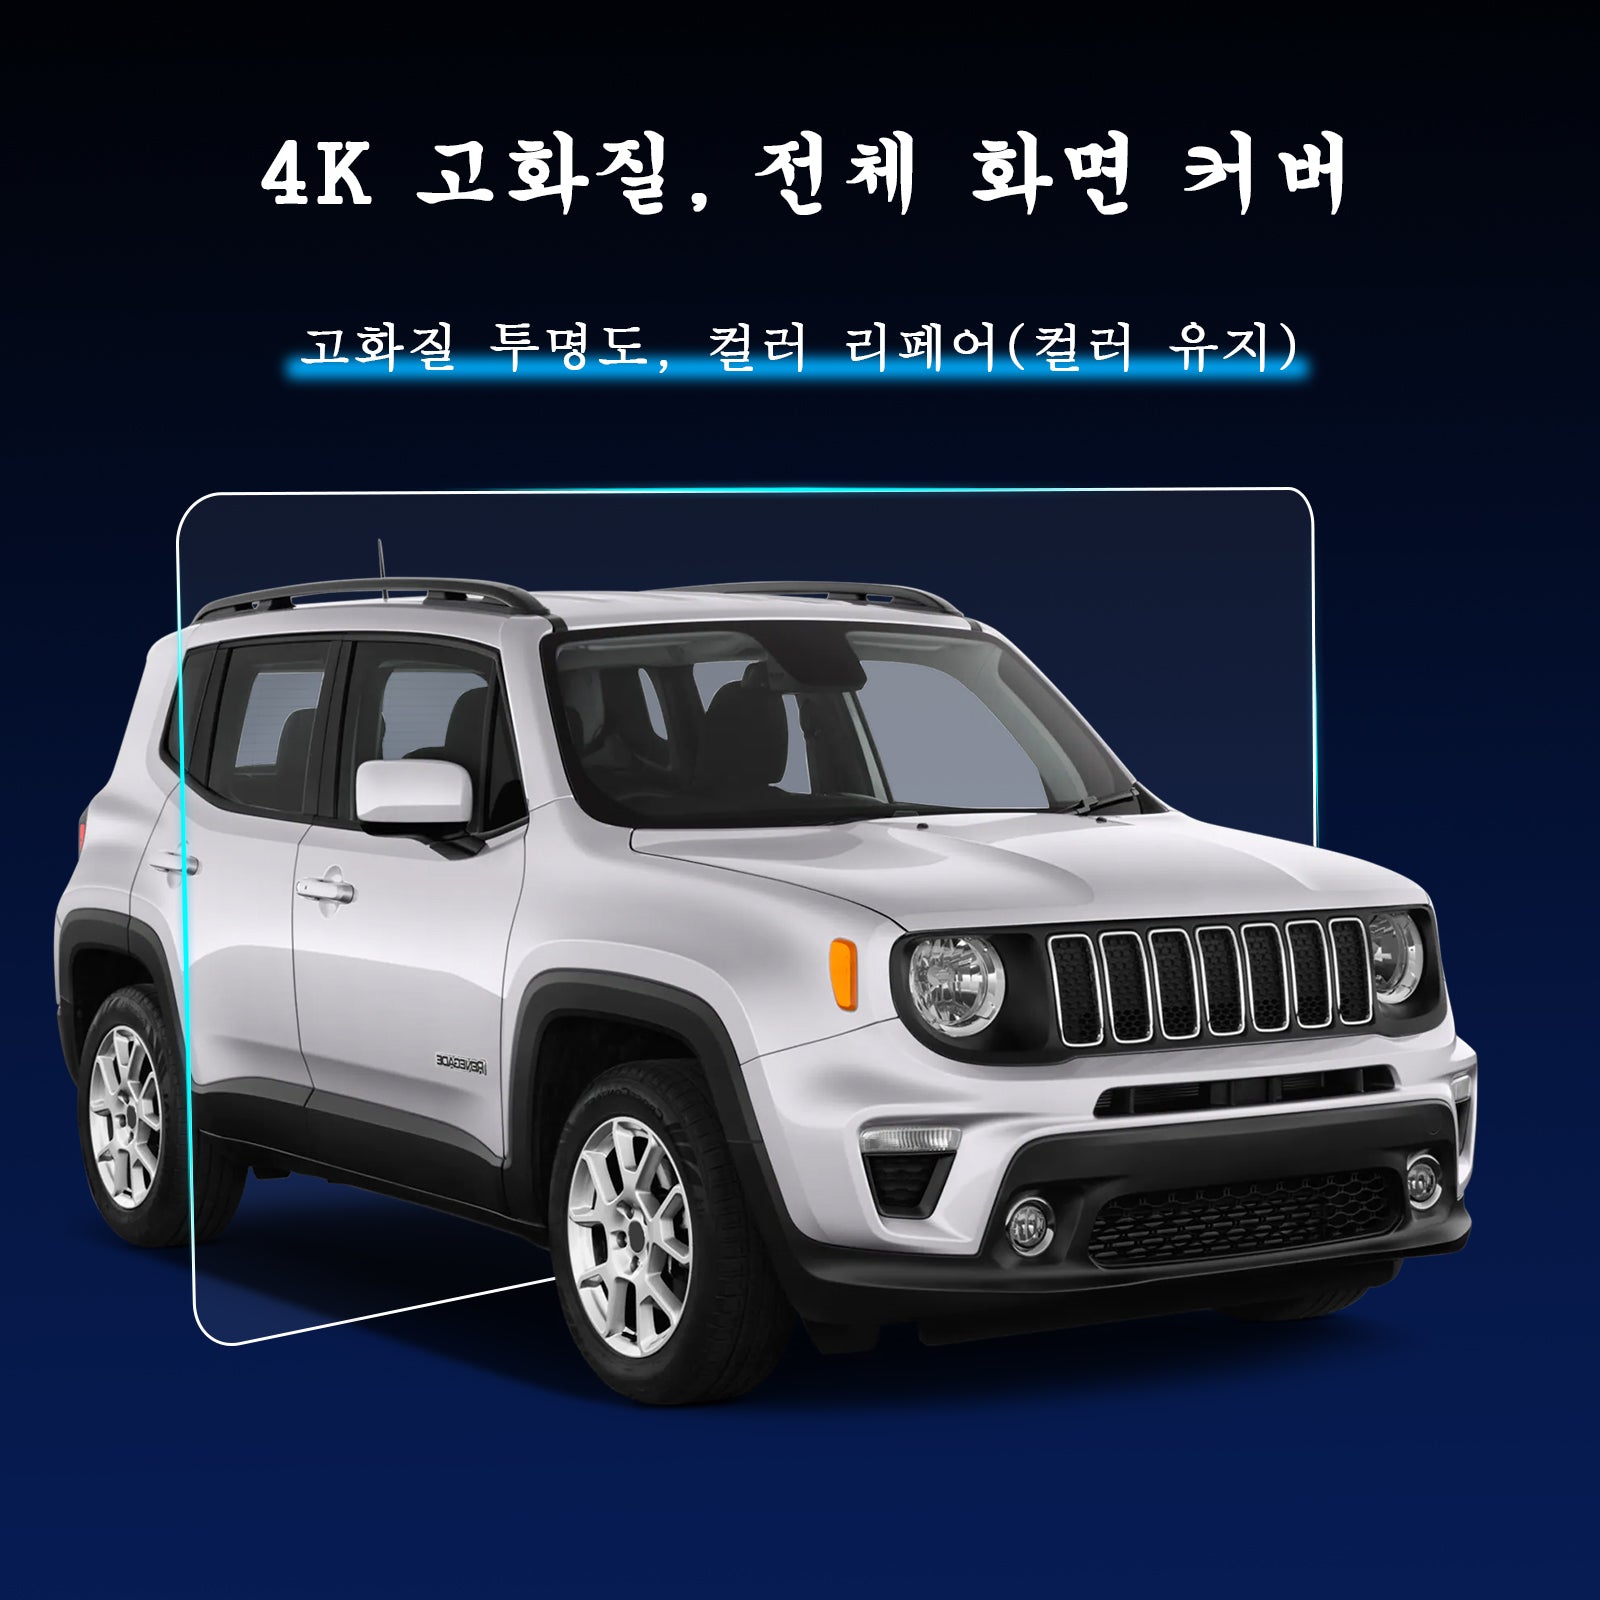 Jeep Renegade BU 8.4" Screen Protector - LFOTPP Car Accessories